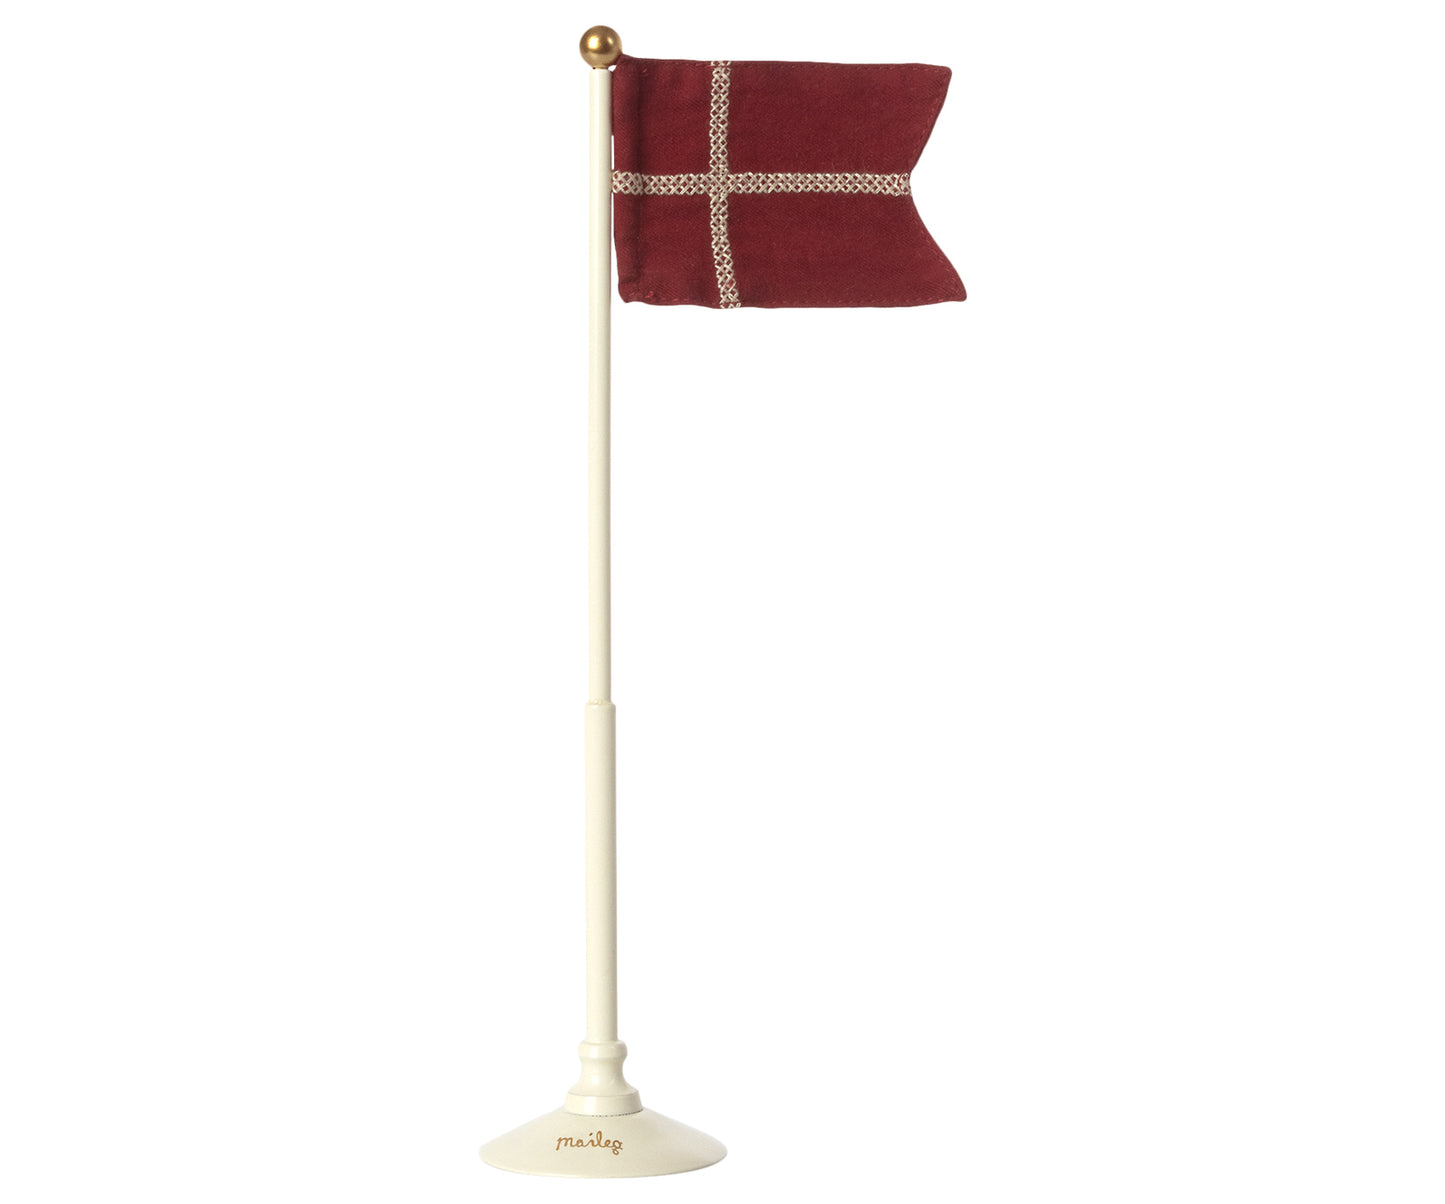 Dannebrog Table Flag